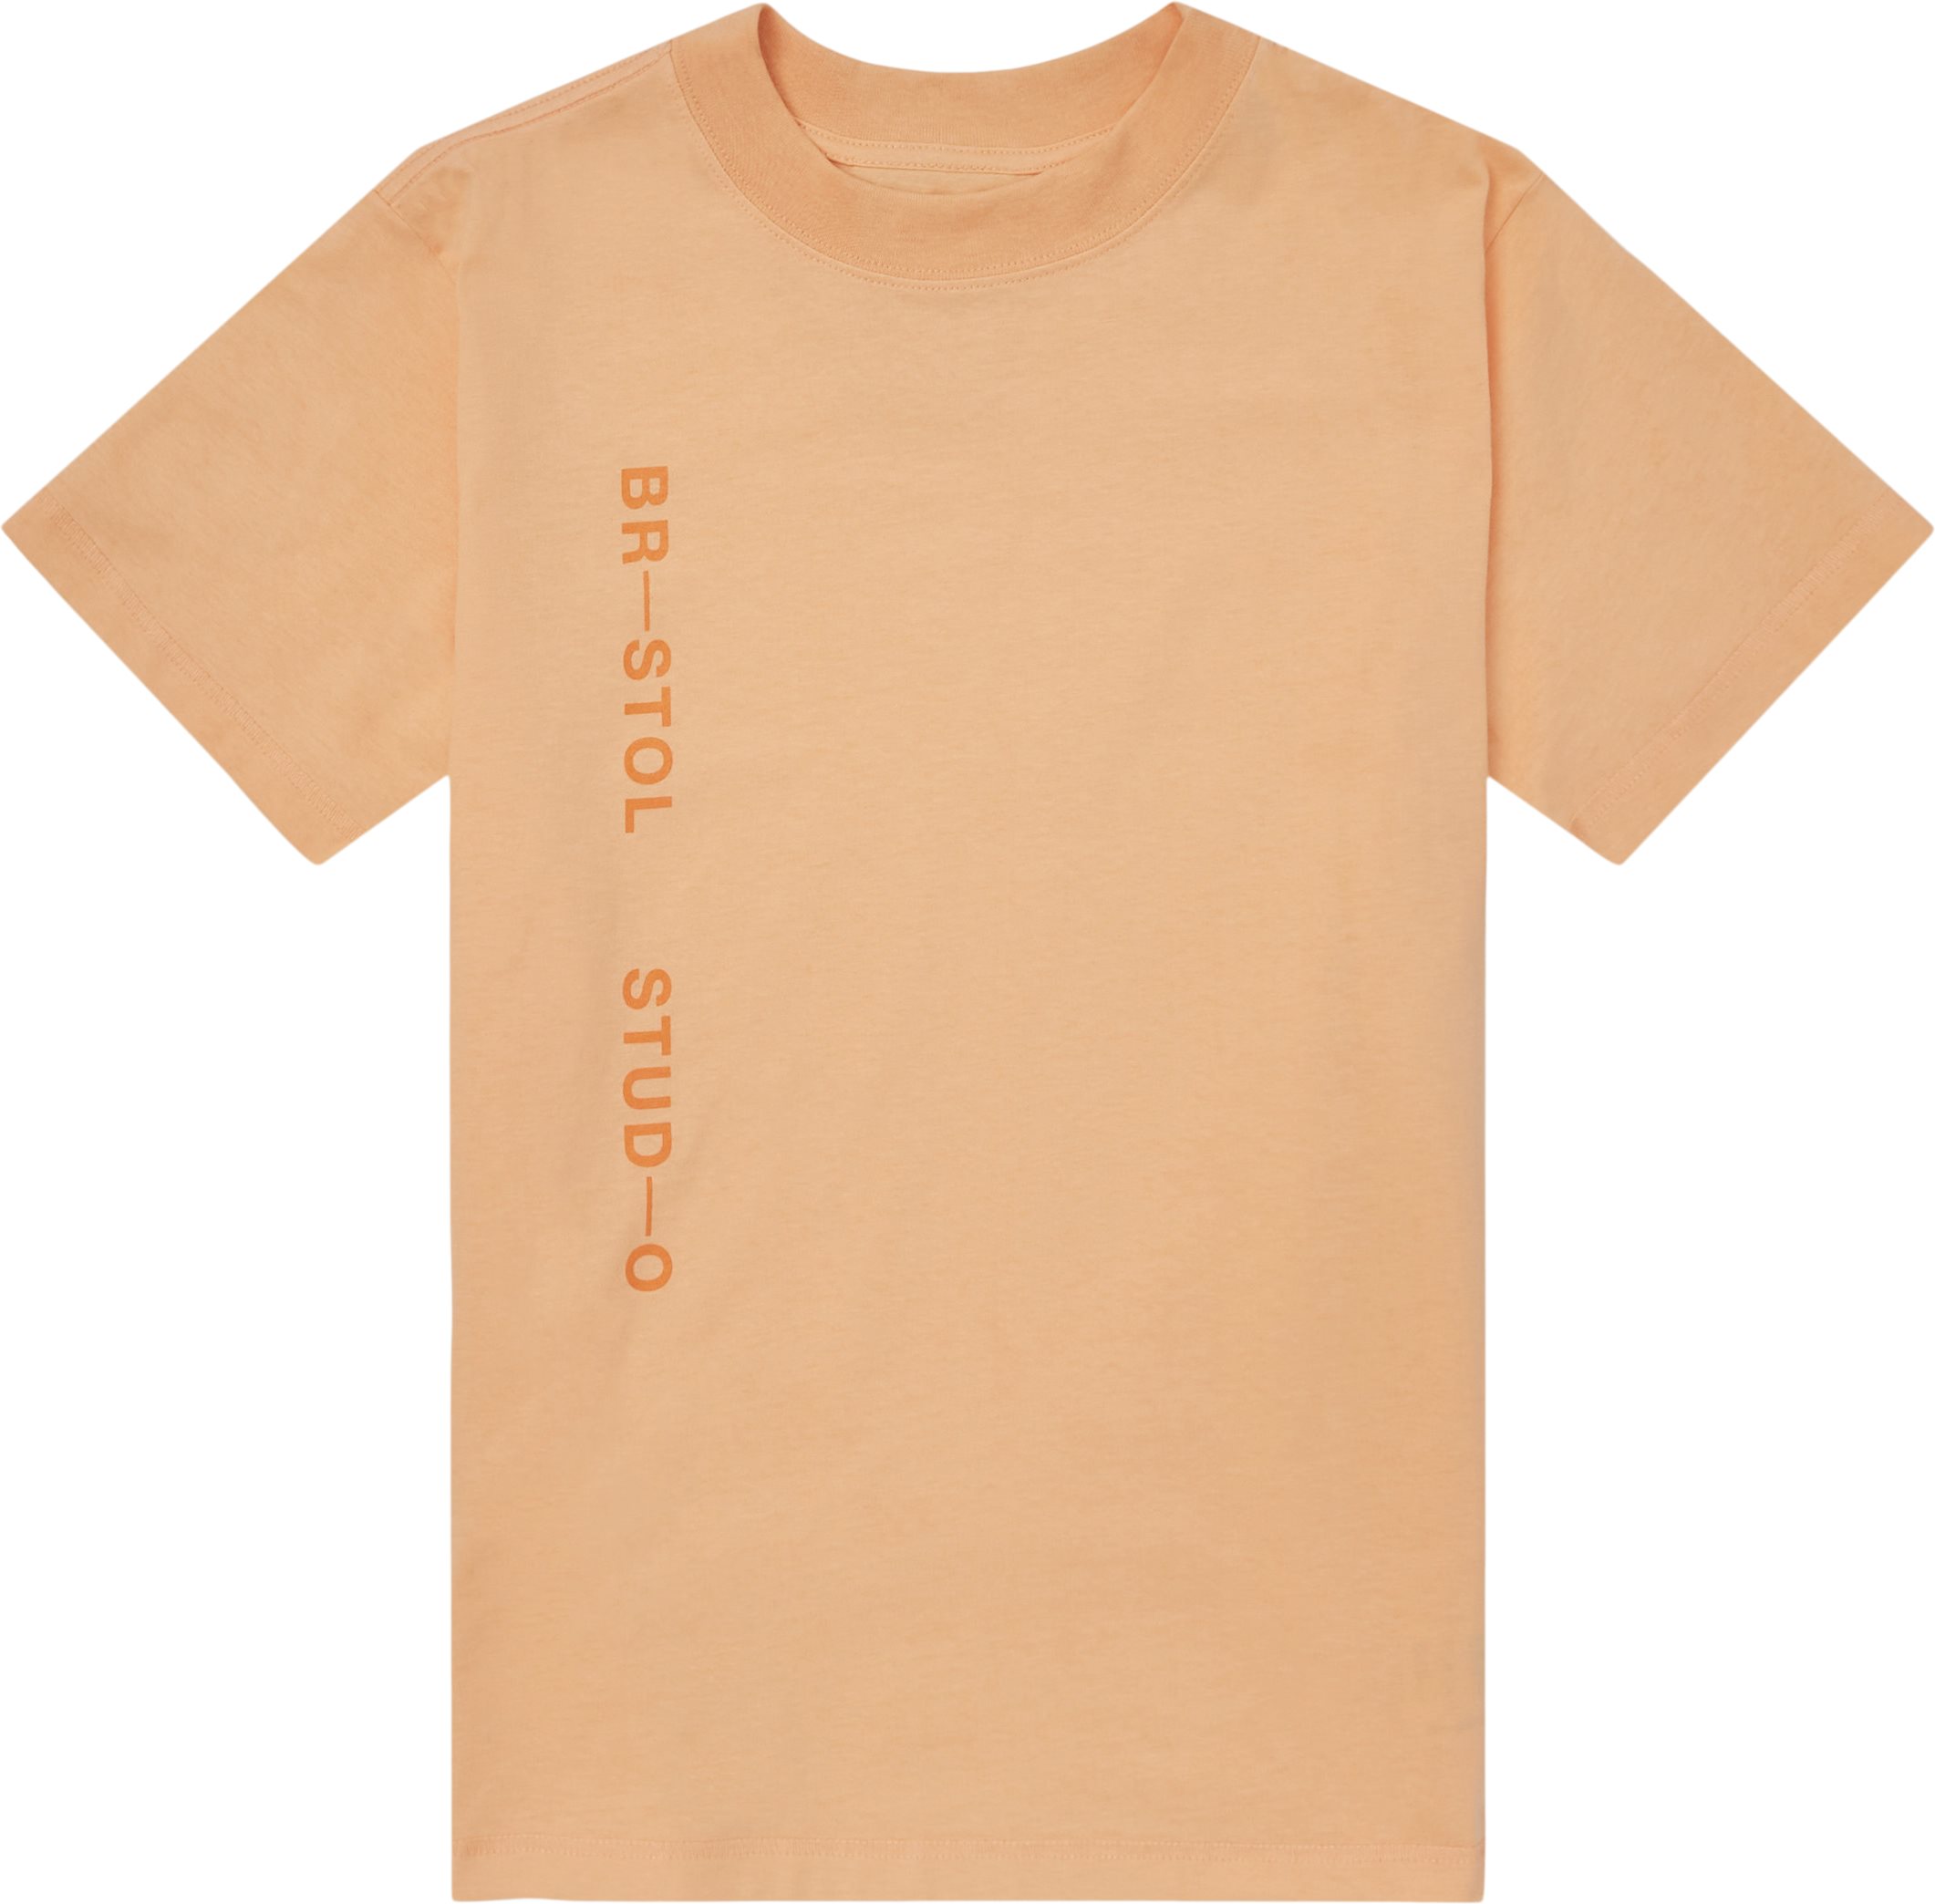 Vertical Team Tee - T-shirts - Oversize fit - Orange